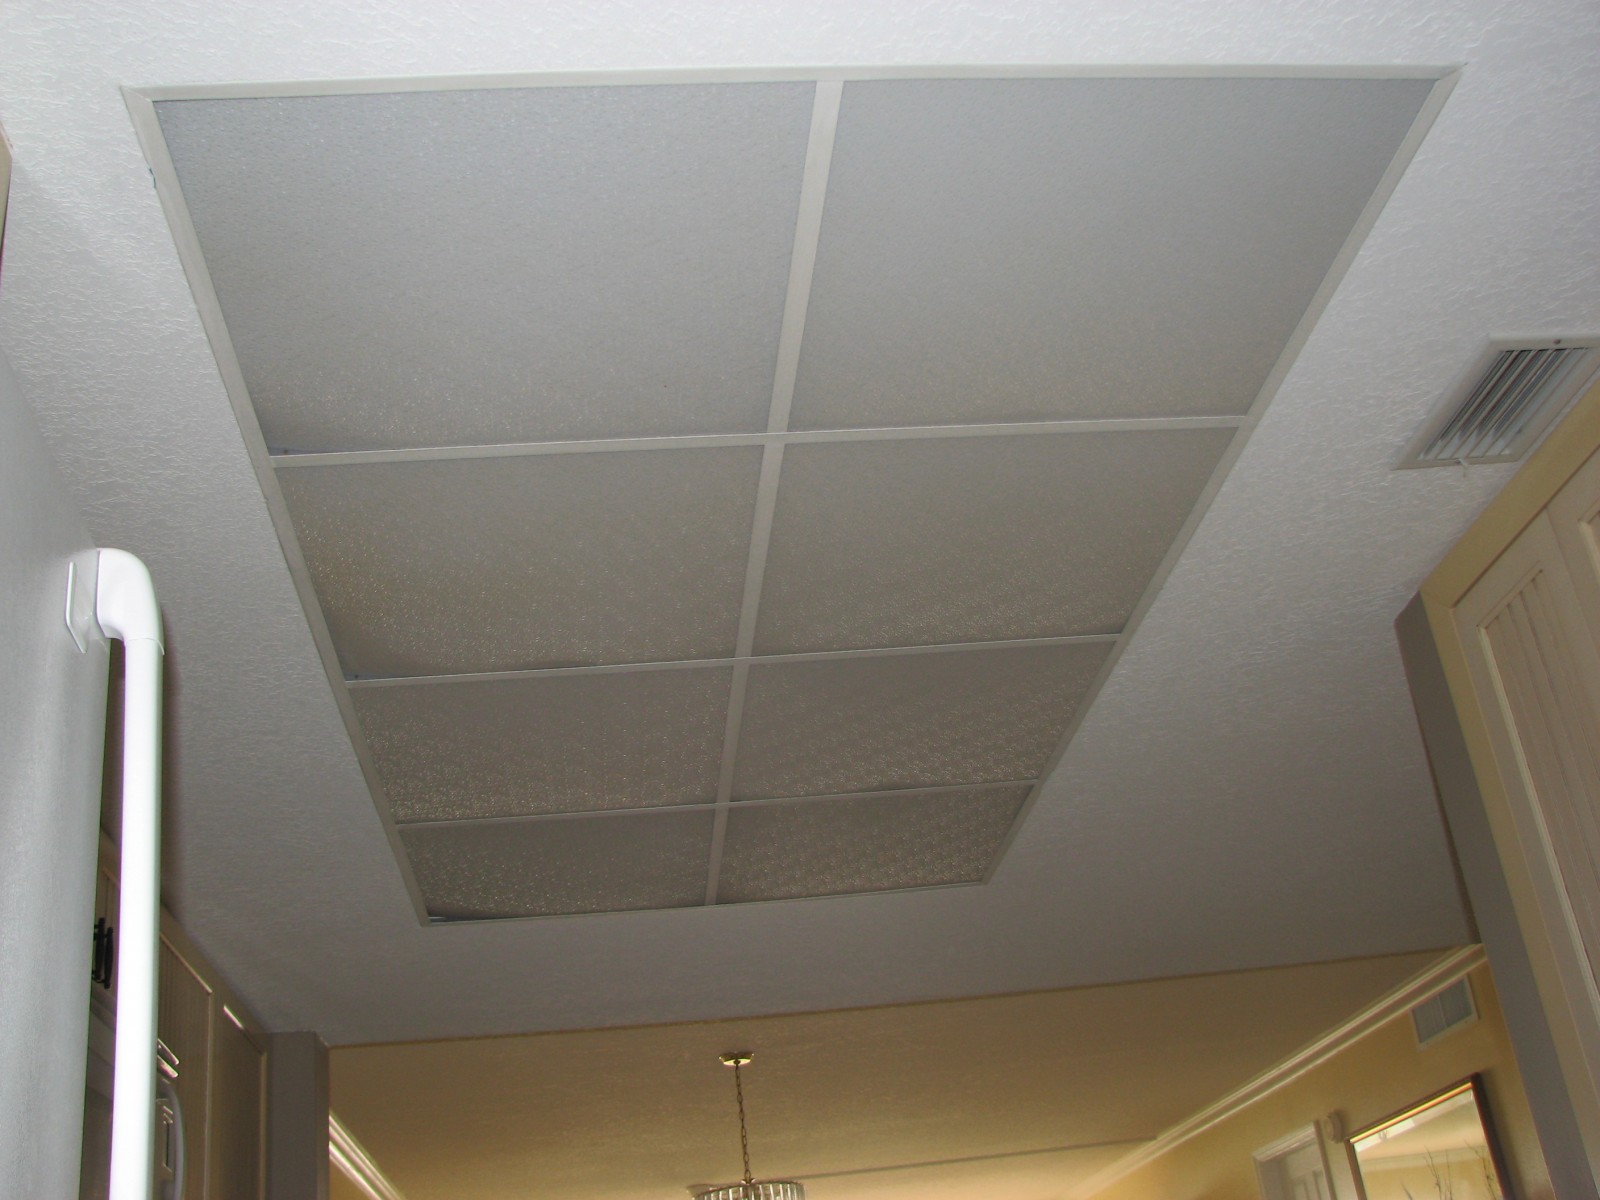 klaver skilsmisse legemliggøre What to do with my old kitchen drop ceiling lighting? Kitchen Remodel